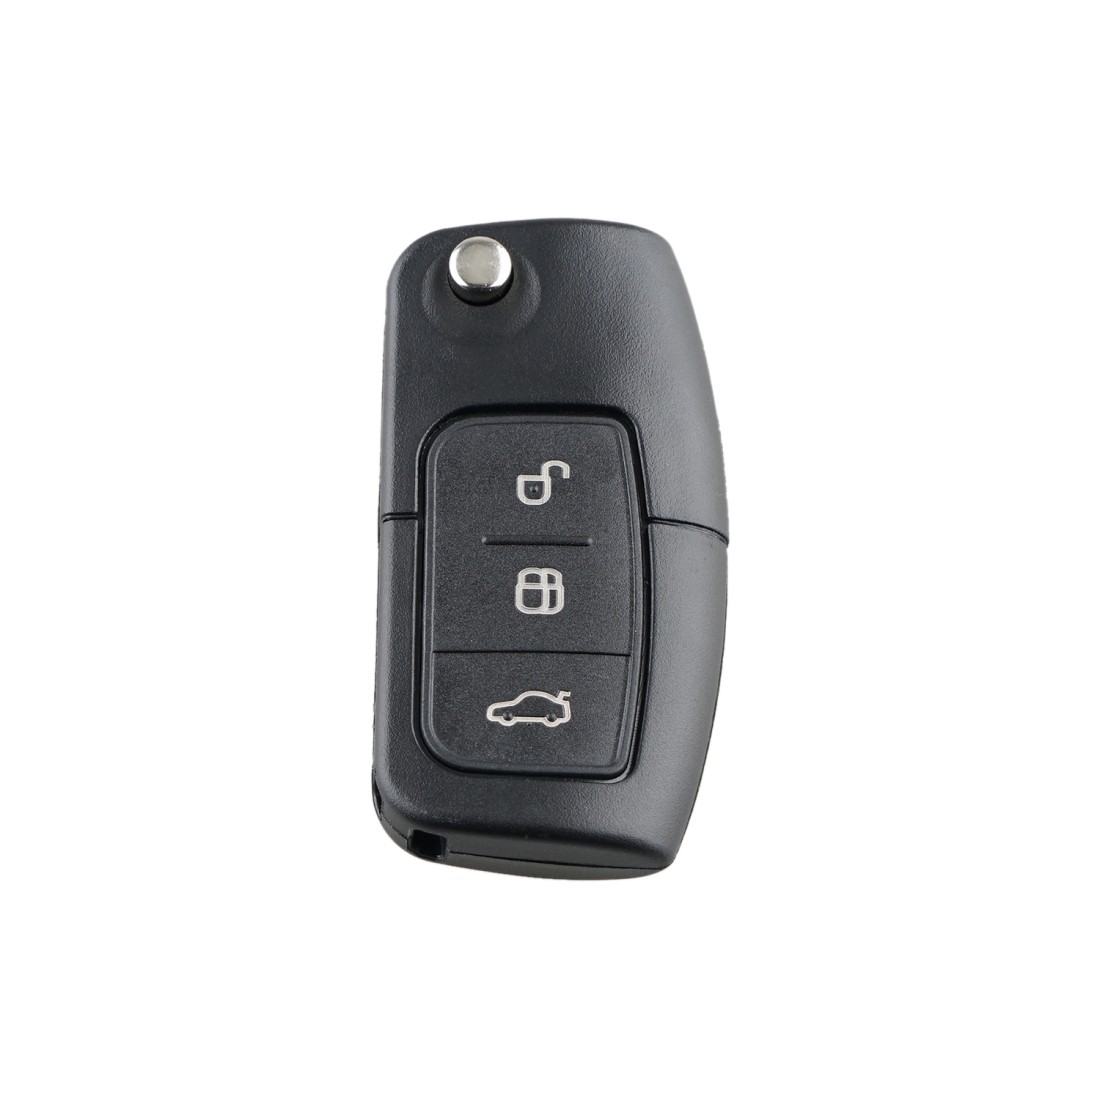 Qinuo Car Keyless Control Remote RF 433MHZ QN-RS571X WITH Ford Key